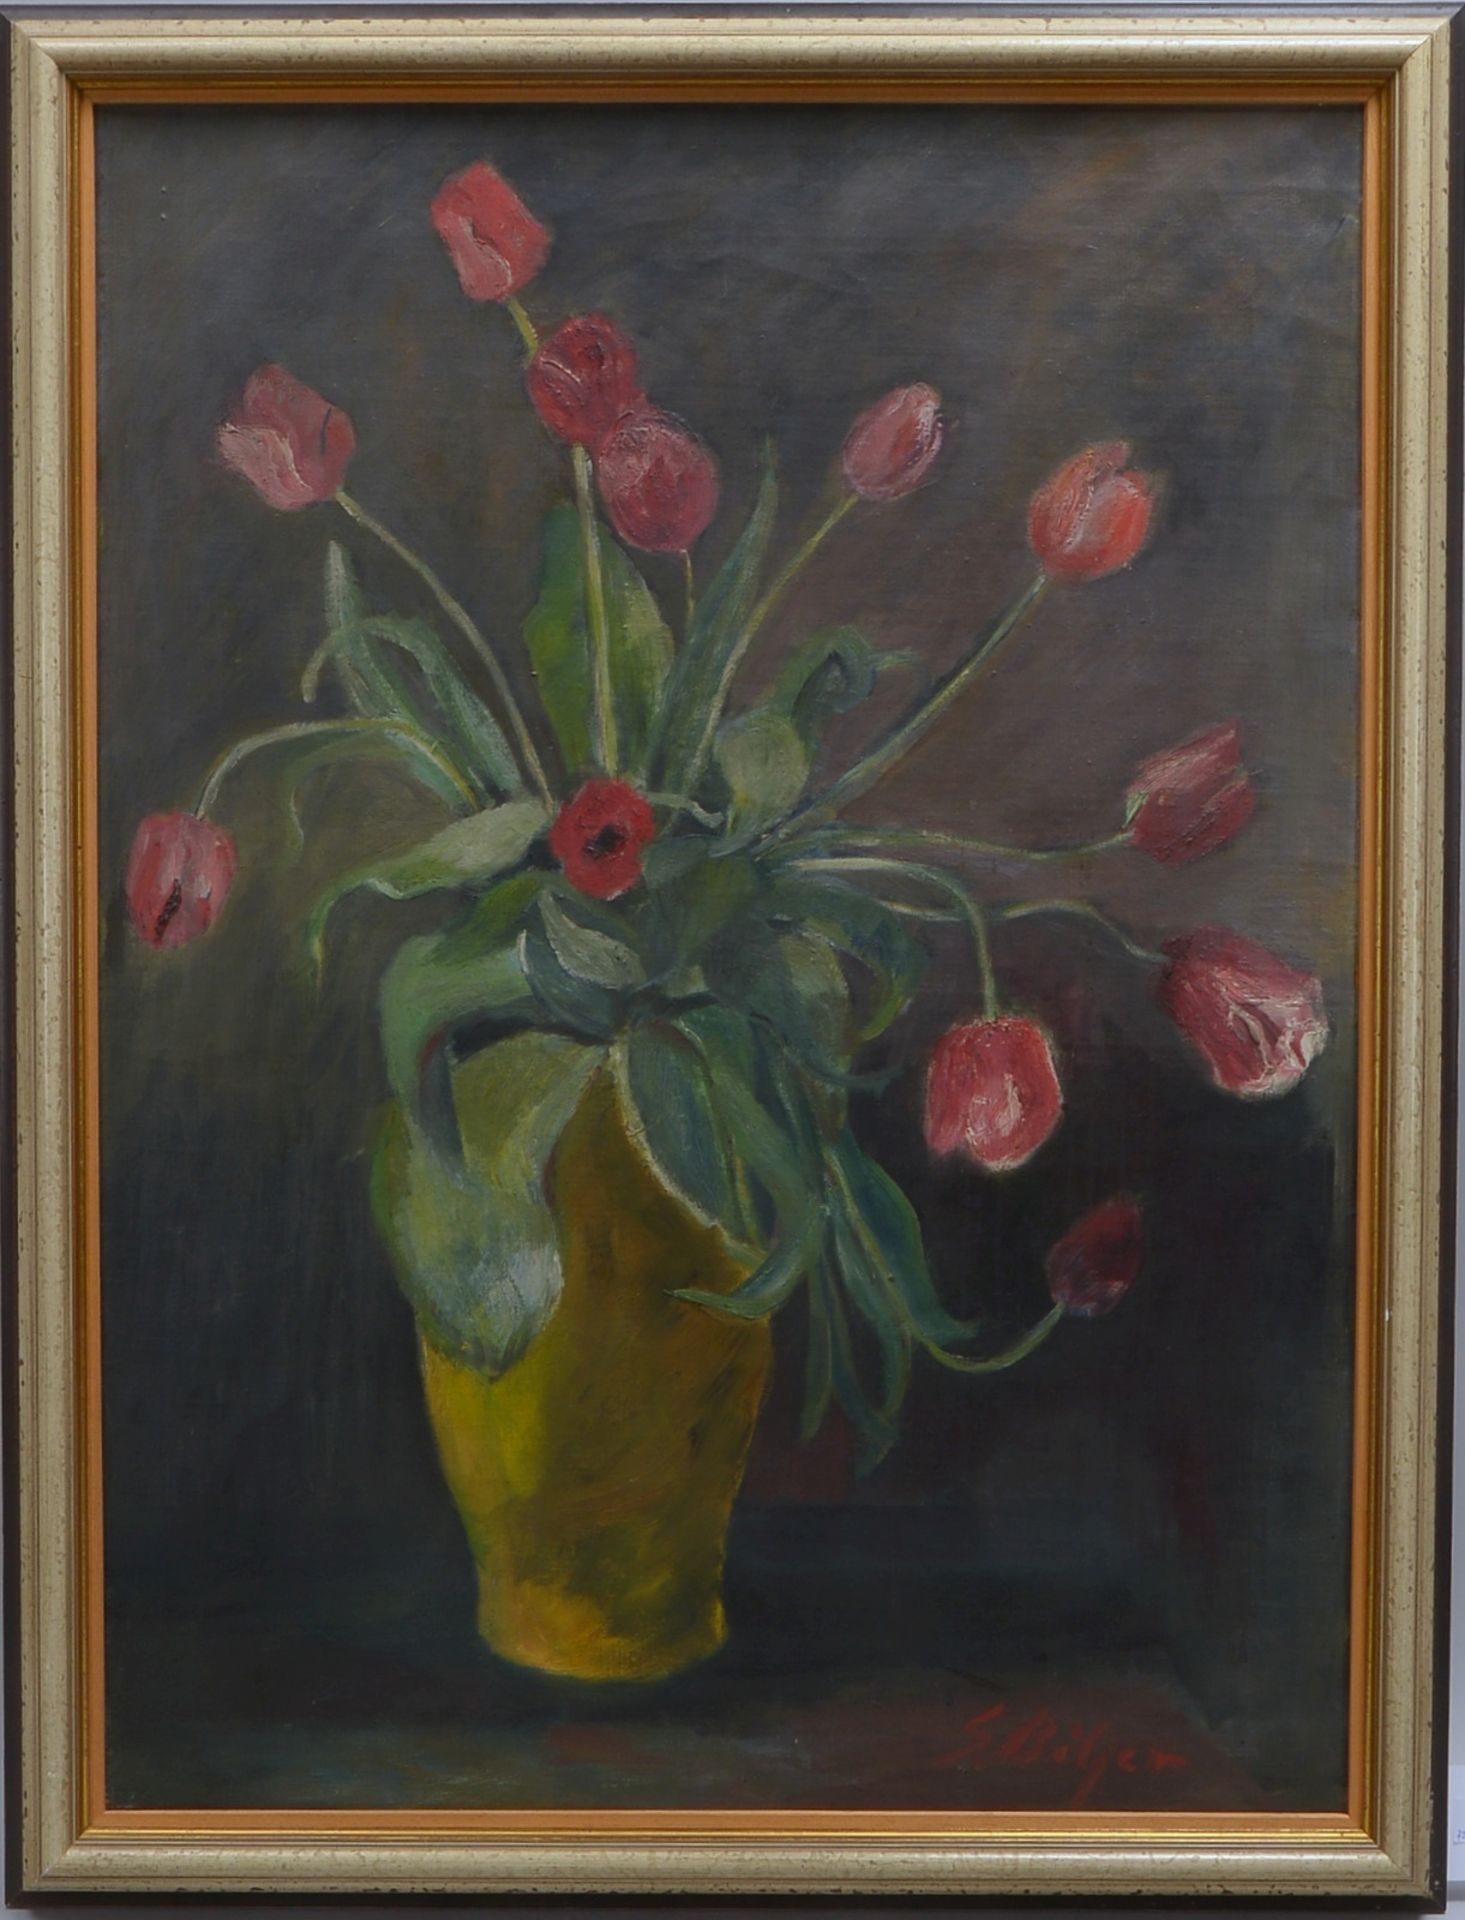 Bötjer, Sophie, 'Tulpen in Vase', Öl/Lw, unten re. sign.; Bildmaße 80 x 59 cm